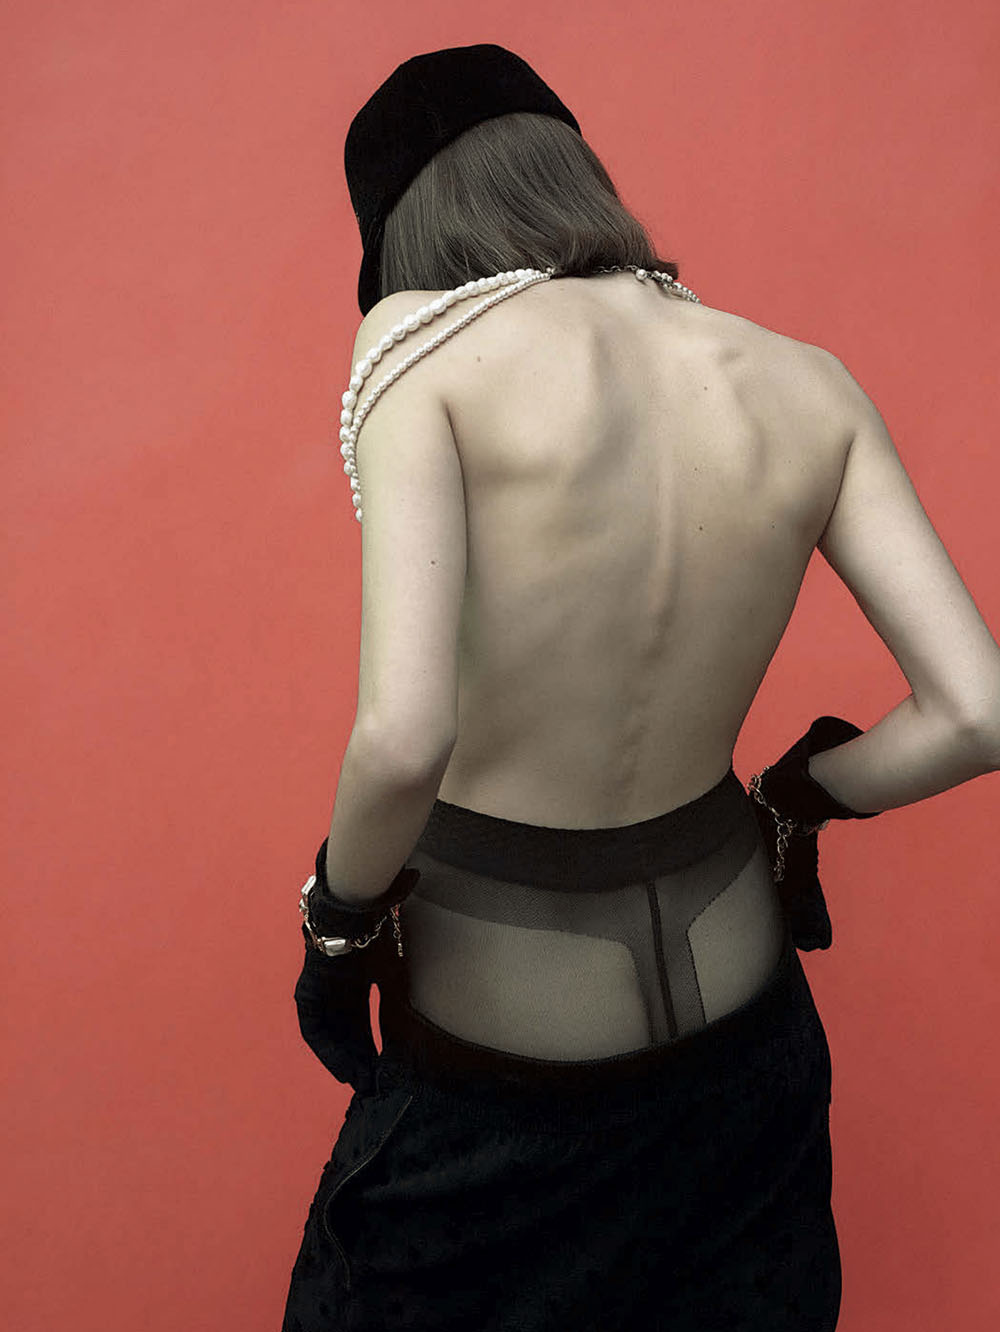 Aylah Peterson by Mert & Marcus for Vogue Italia September 2020